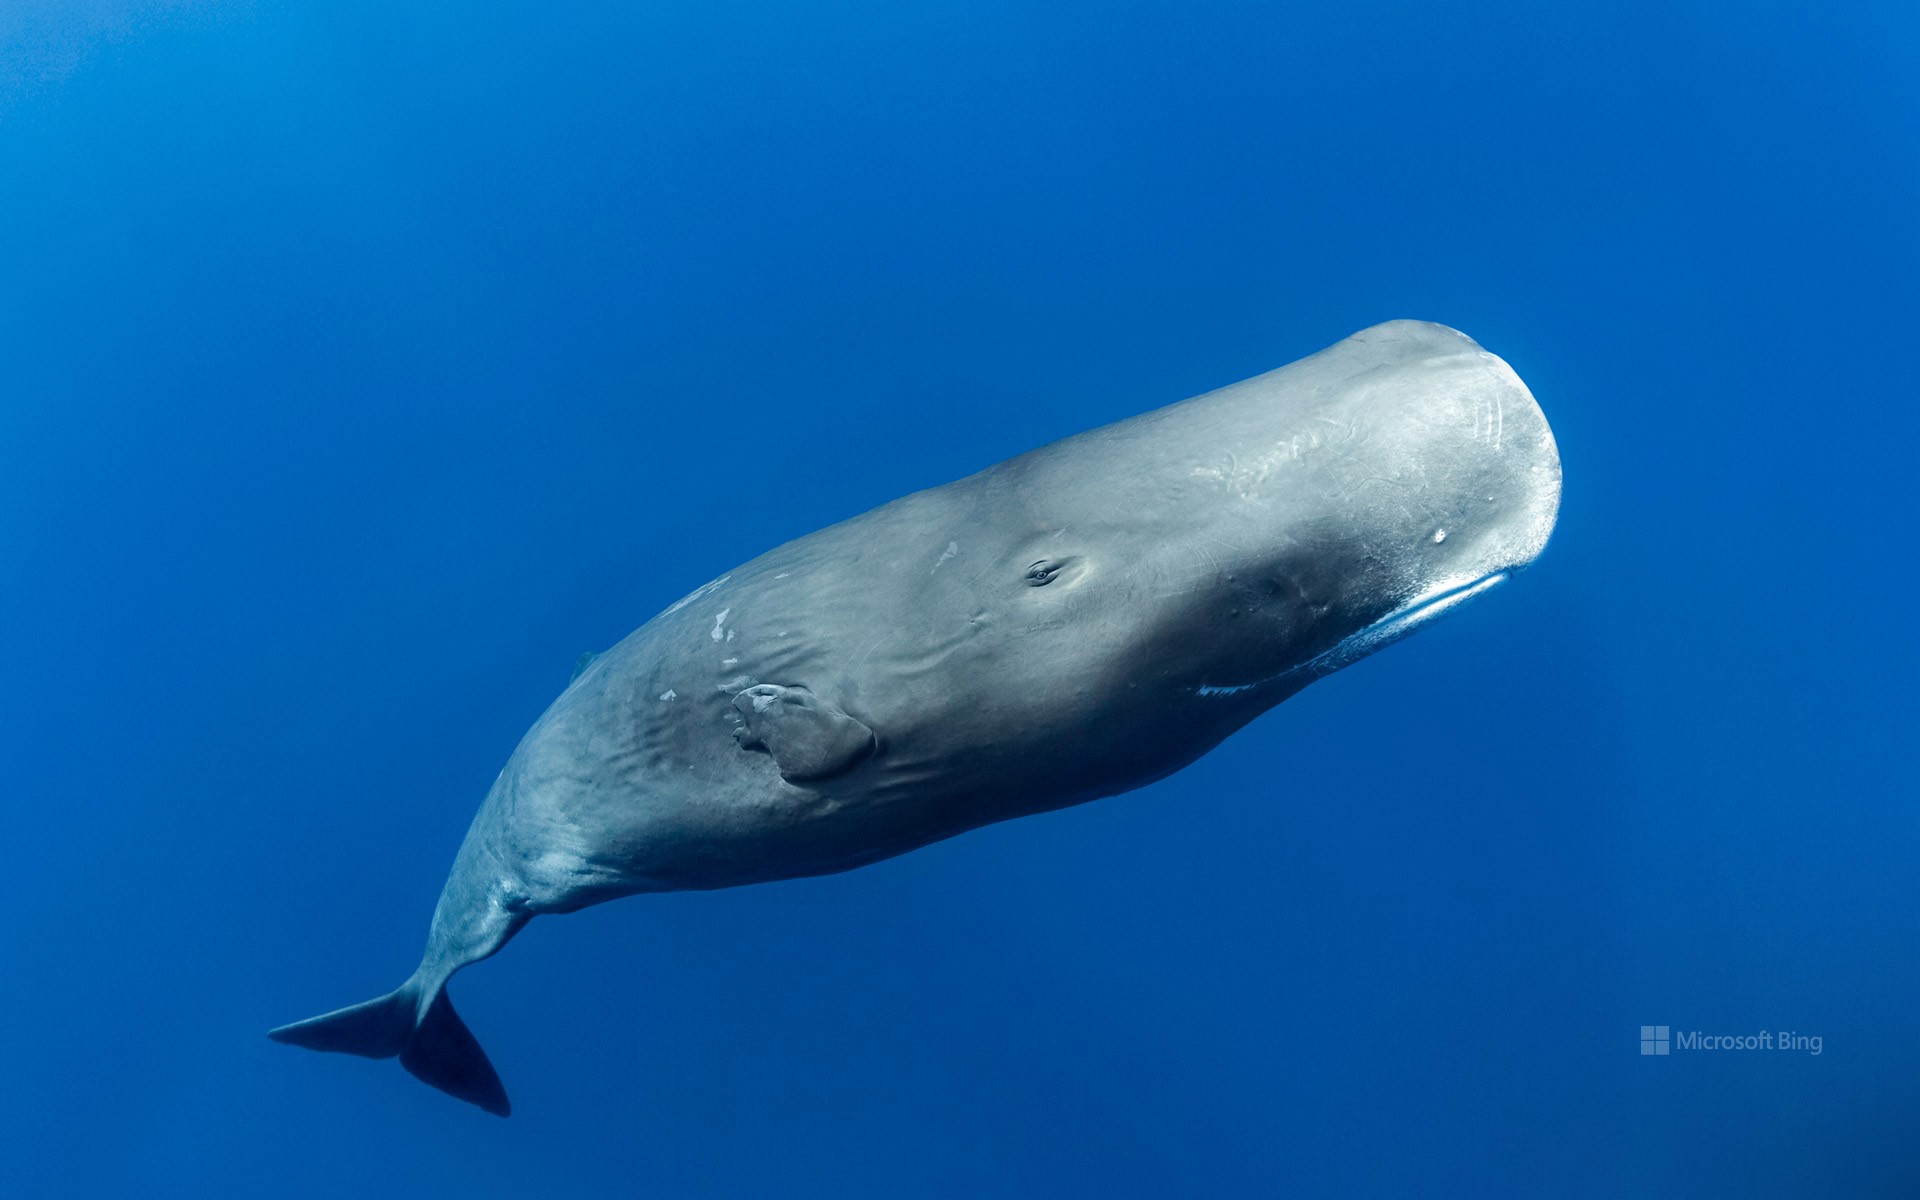 Sperm whale off the coast of Roseau, Dominica, in the Caribbean Sea